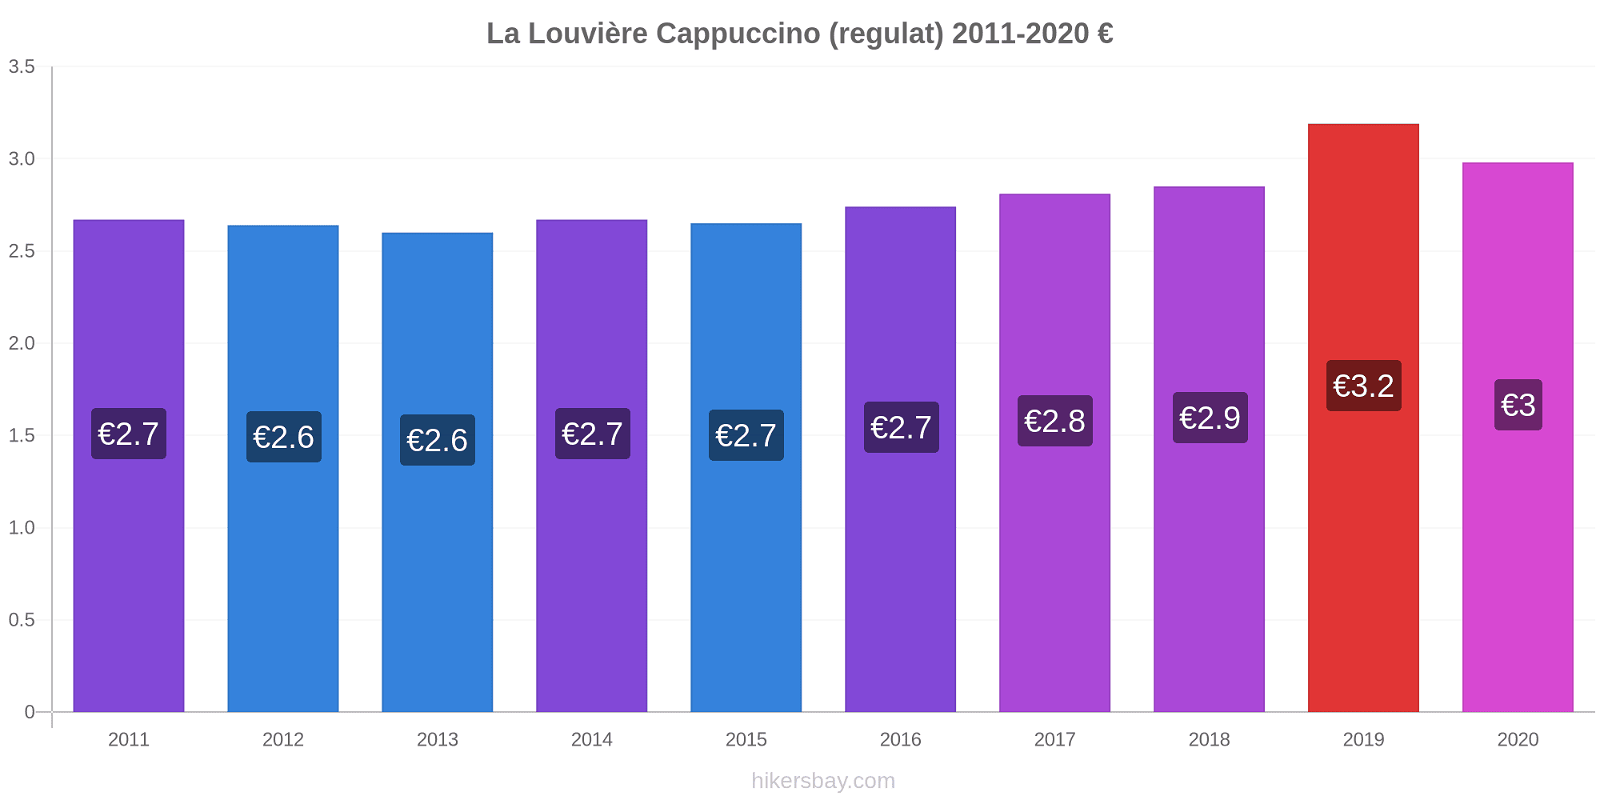 La Louvière modificări de preț Cappuccino (regulat) hikersbay.com